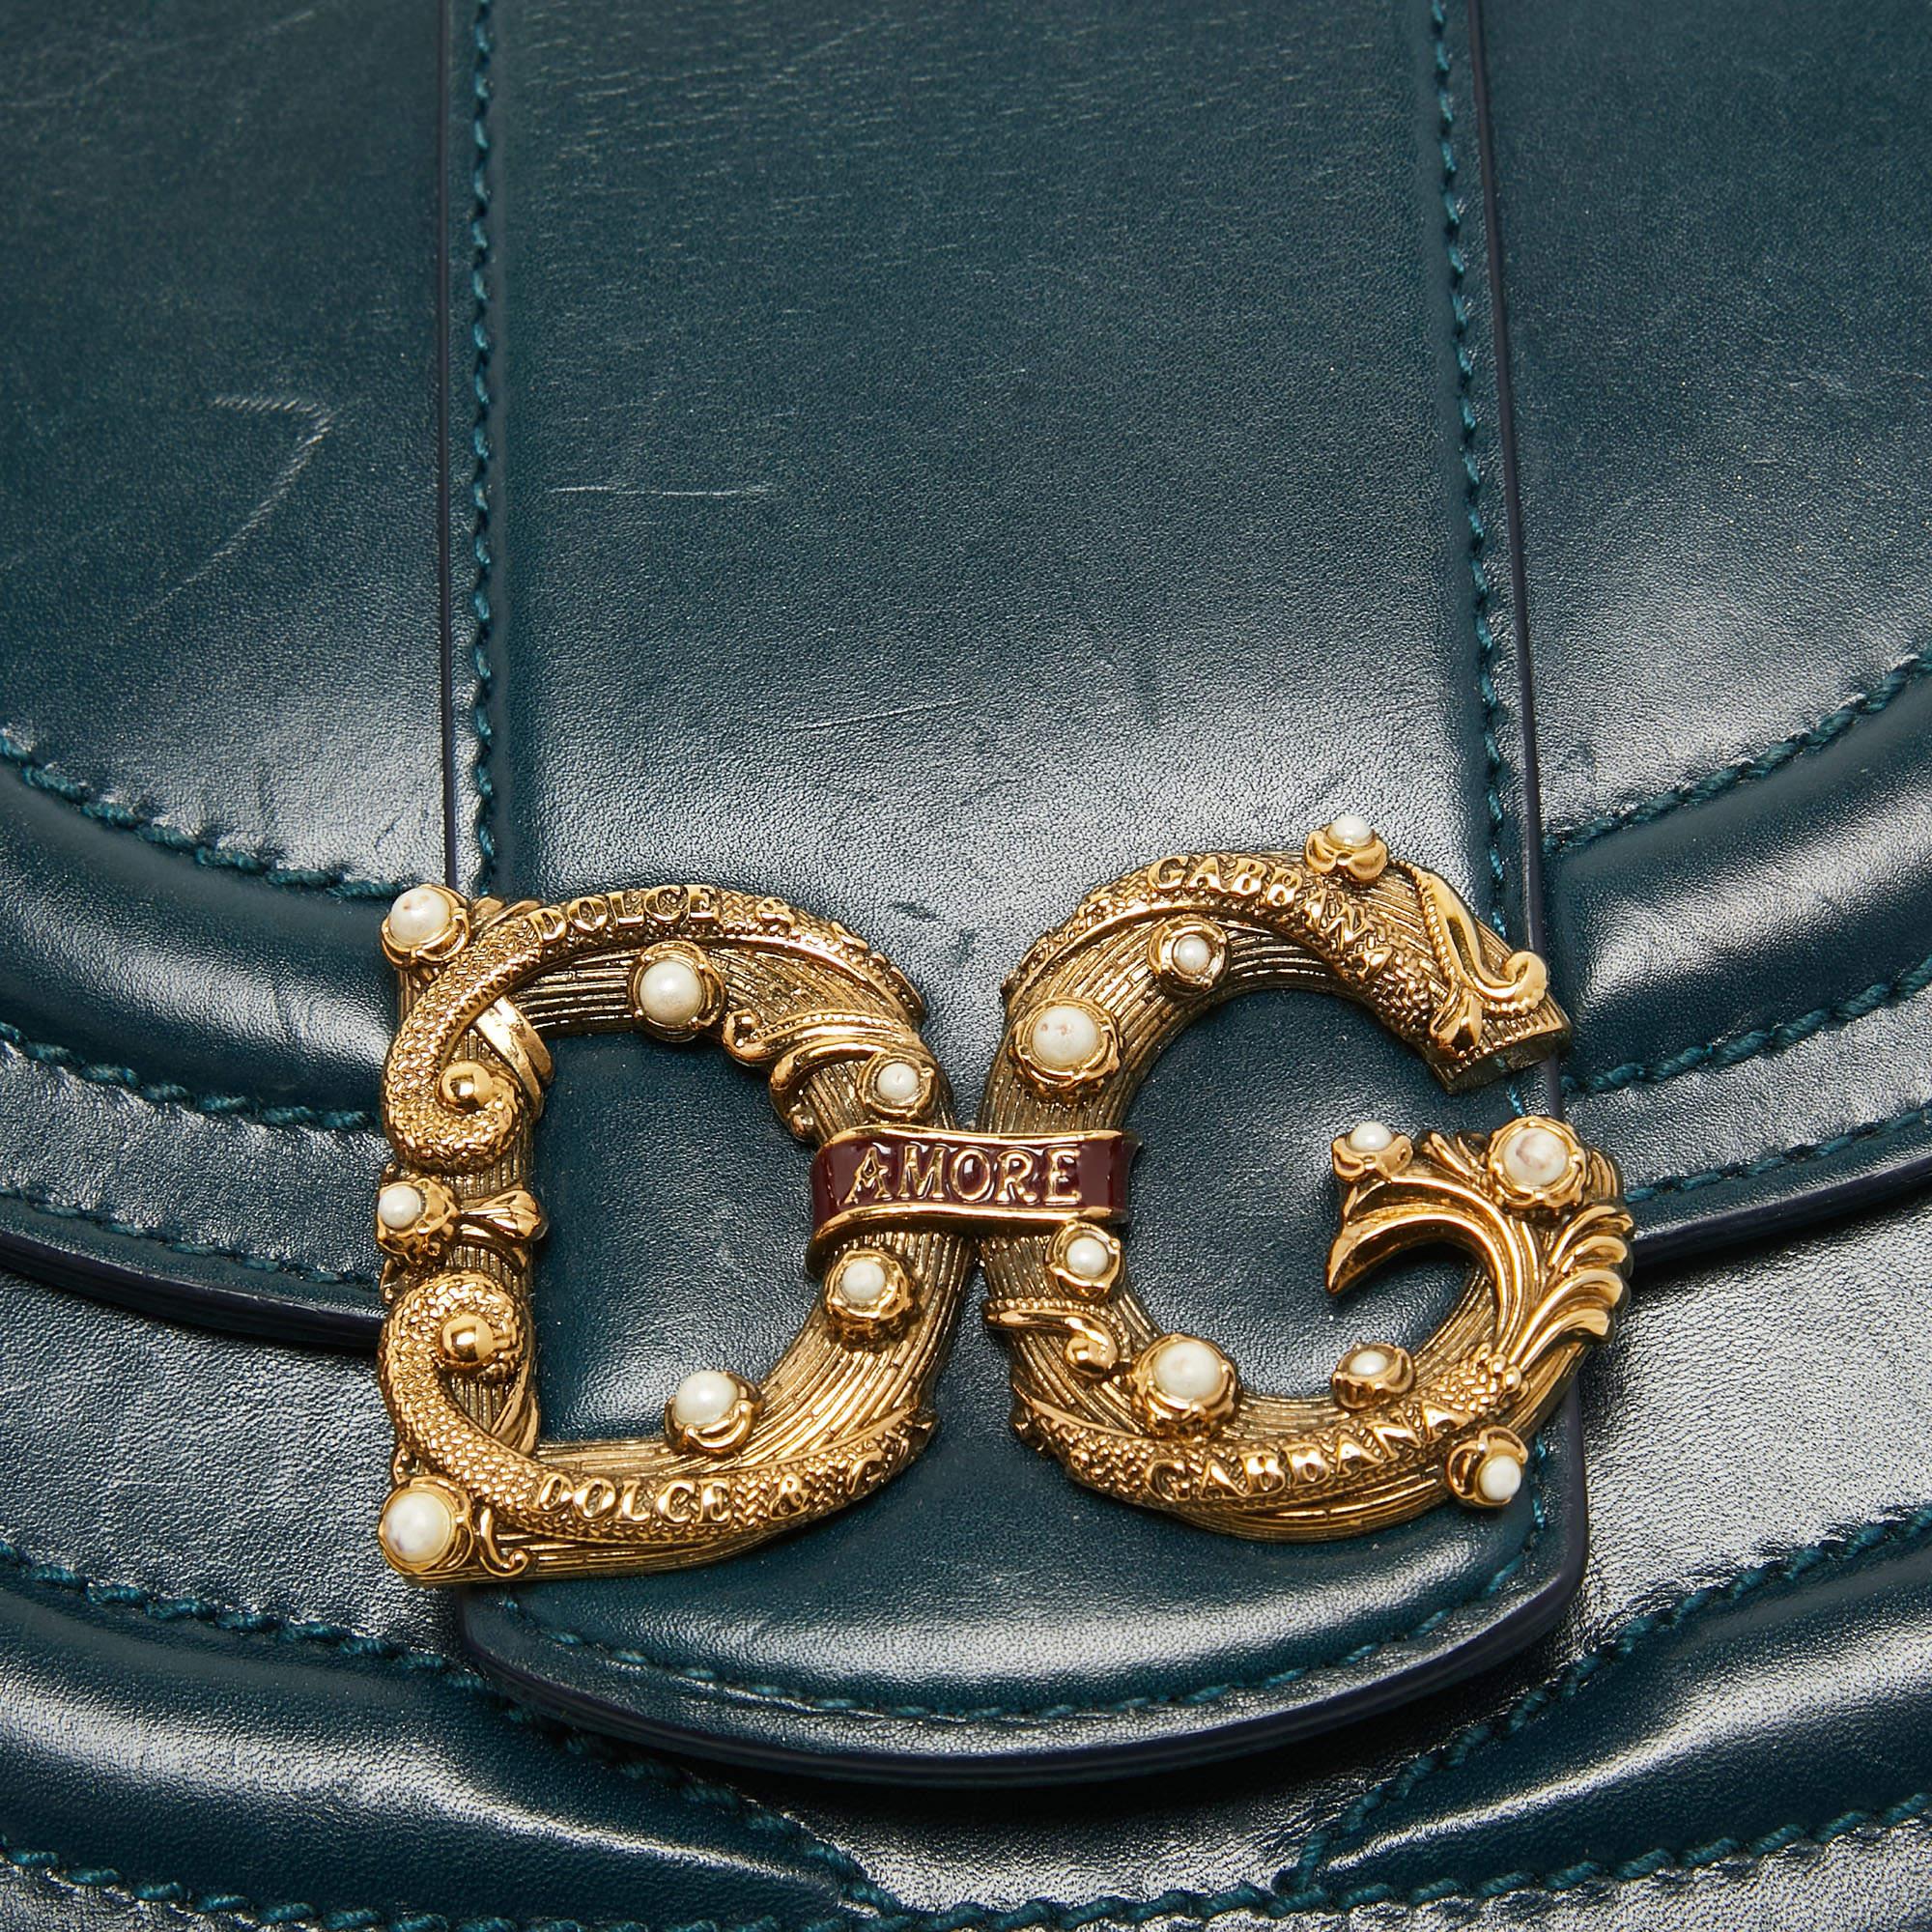 Dolce & Gabbana Teal Leather Amore Crossbody Bag 3